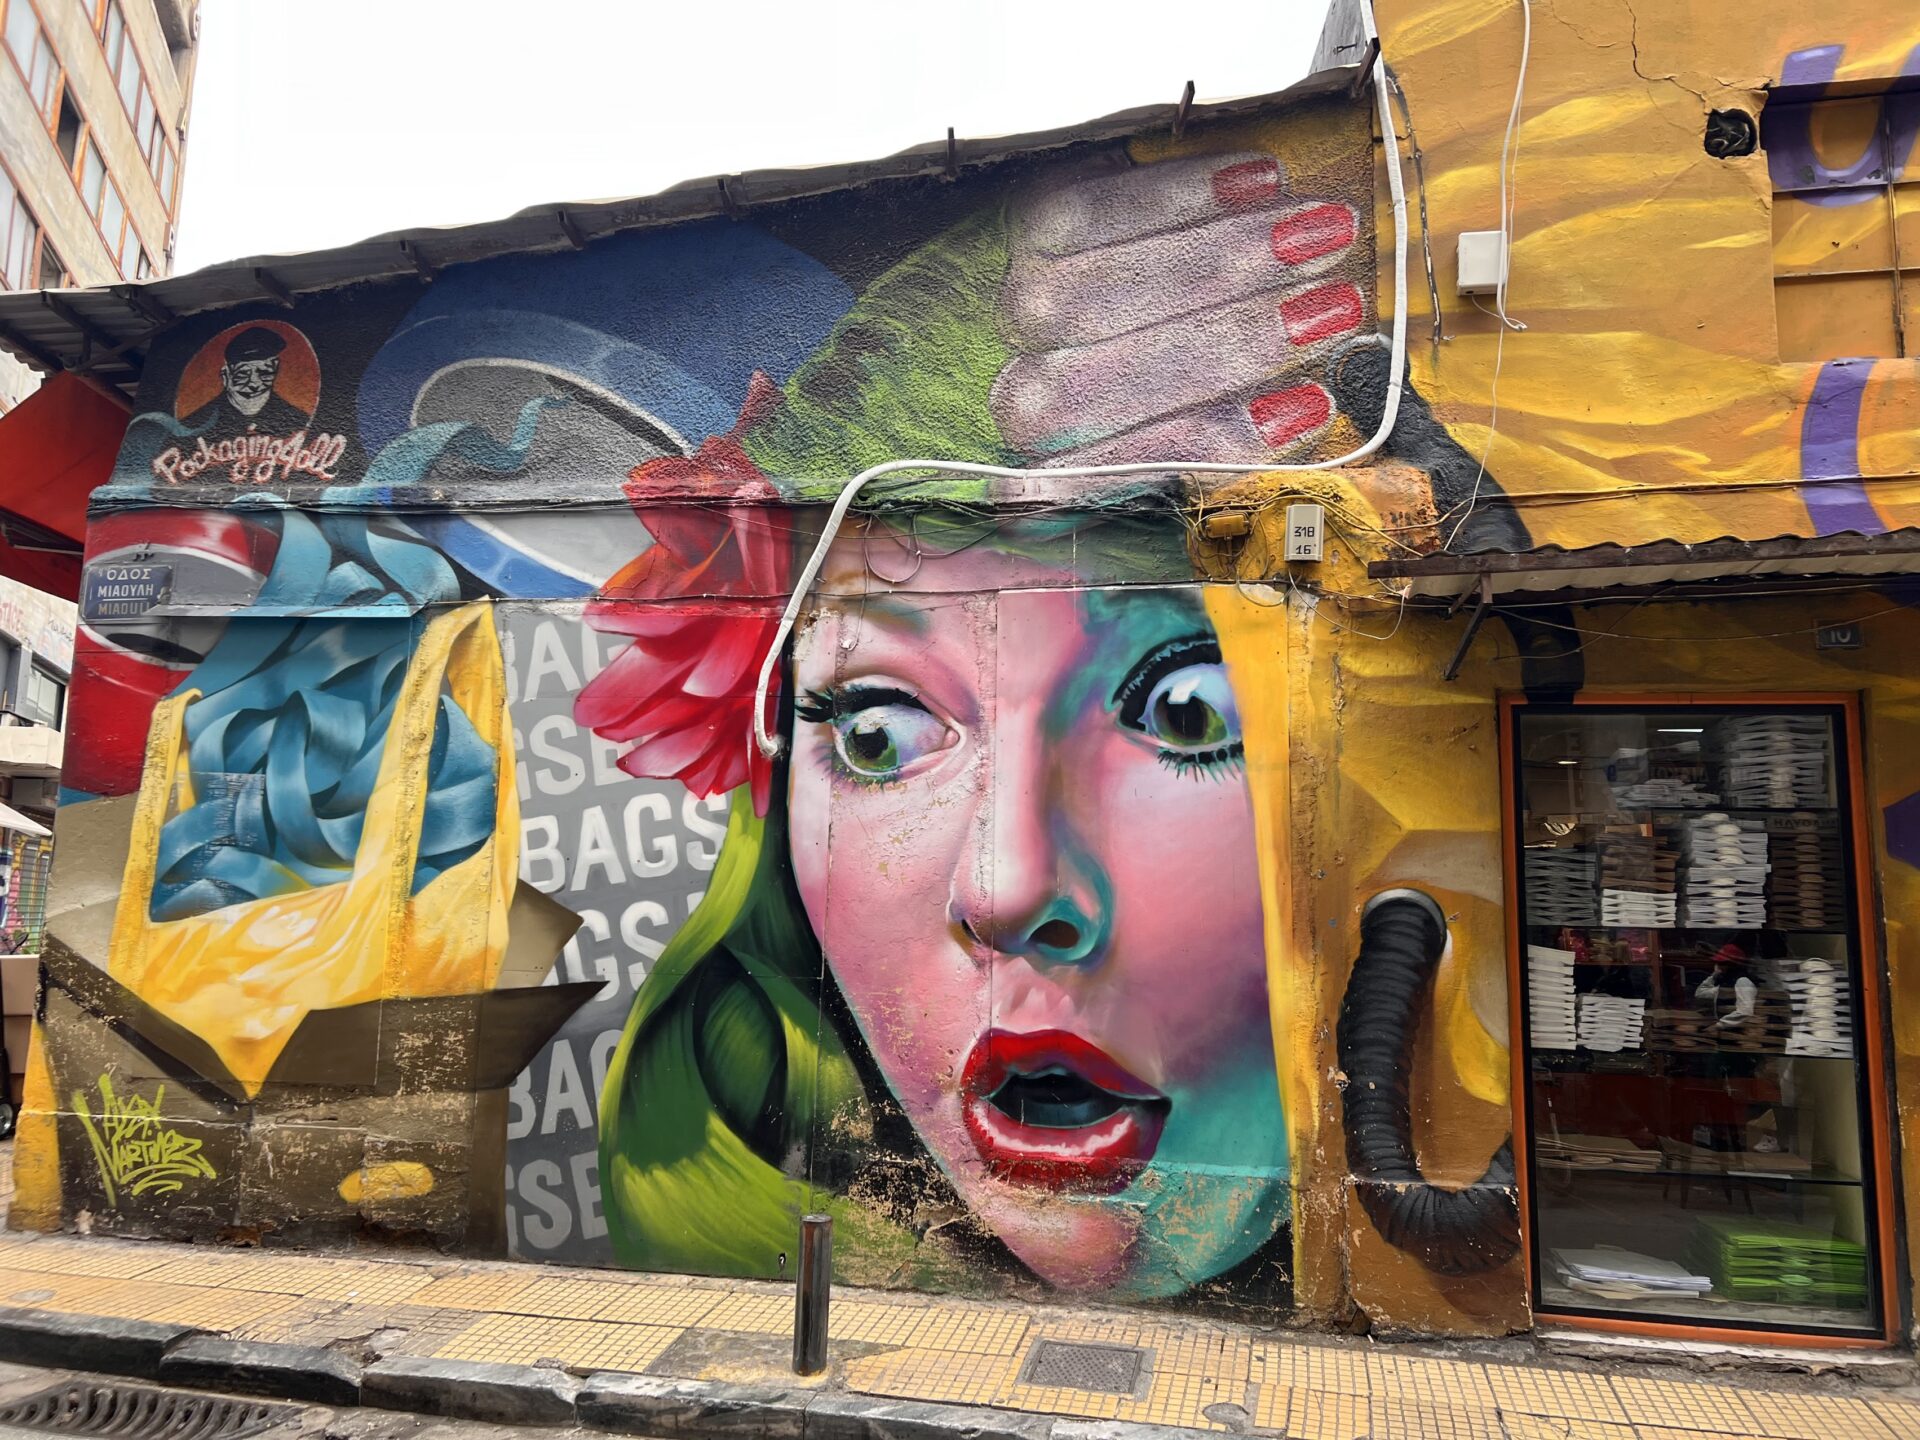 Street art tour experience at Athens.